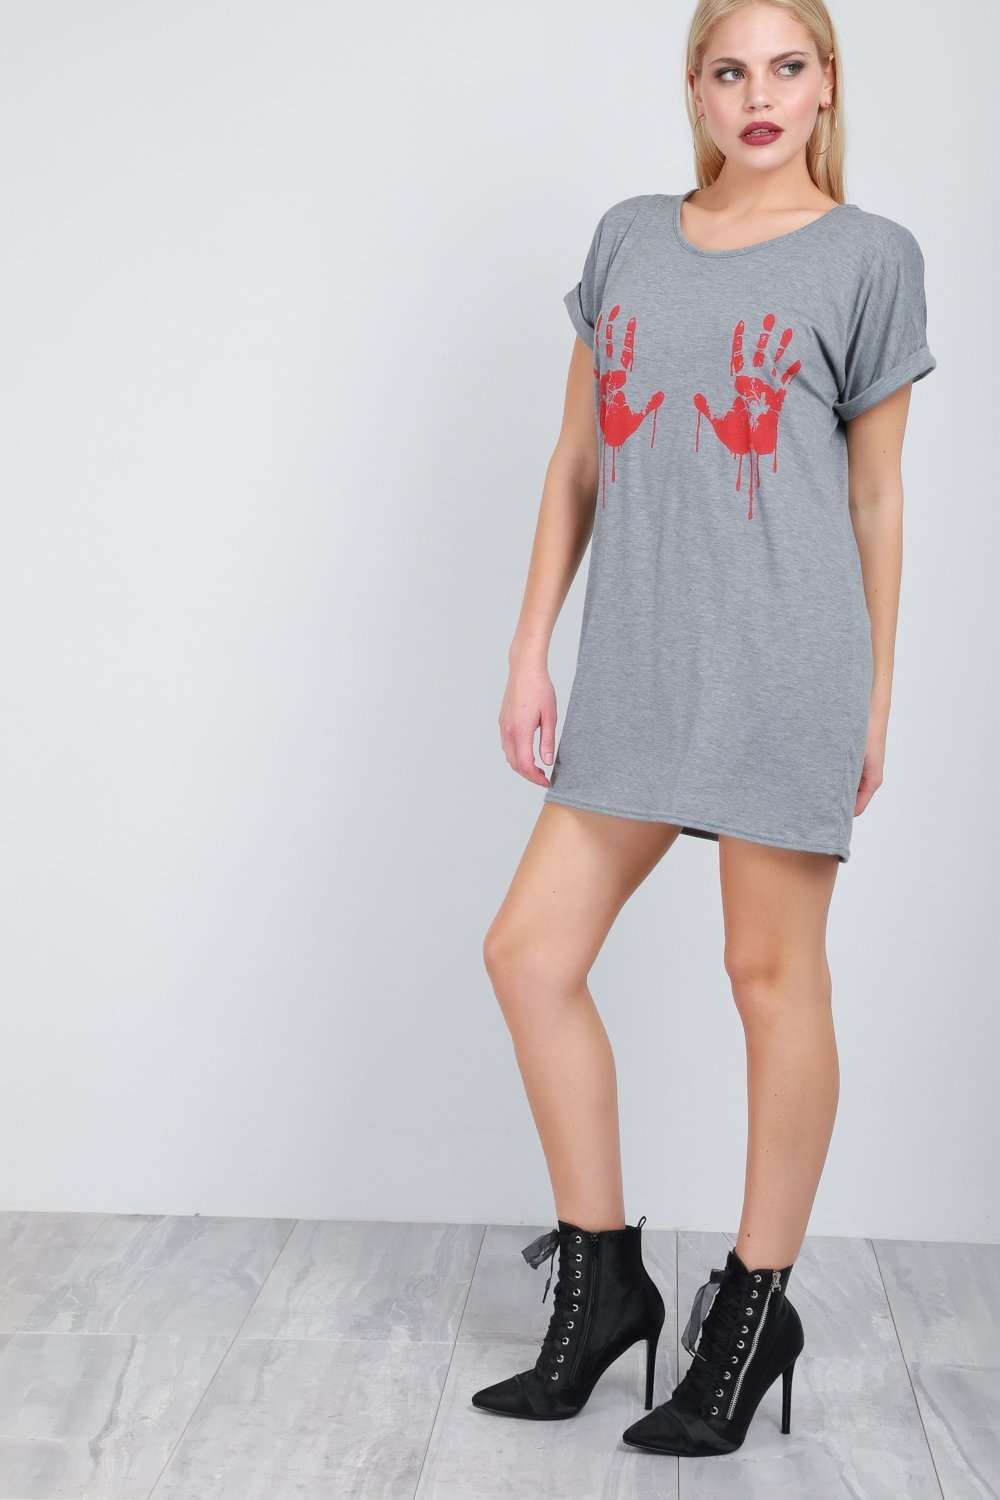 Blood Graphic Print Halloween Tshirt Dress - bejealous-com